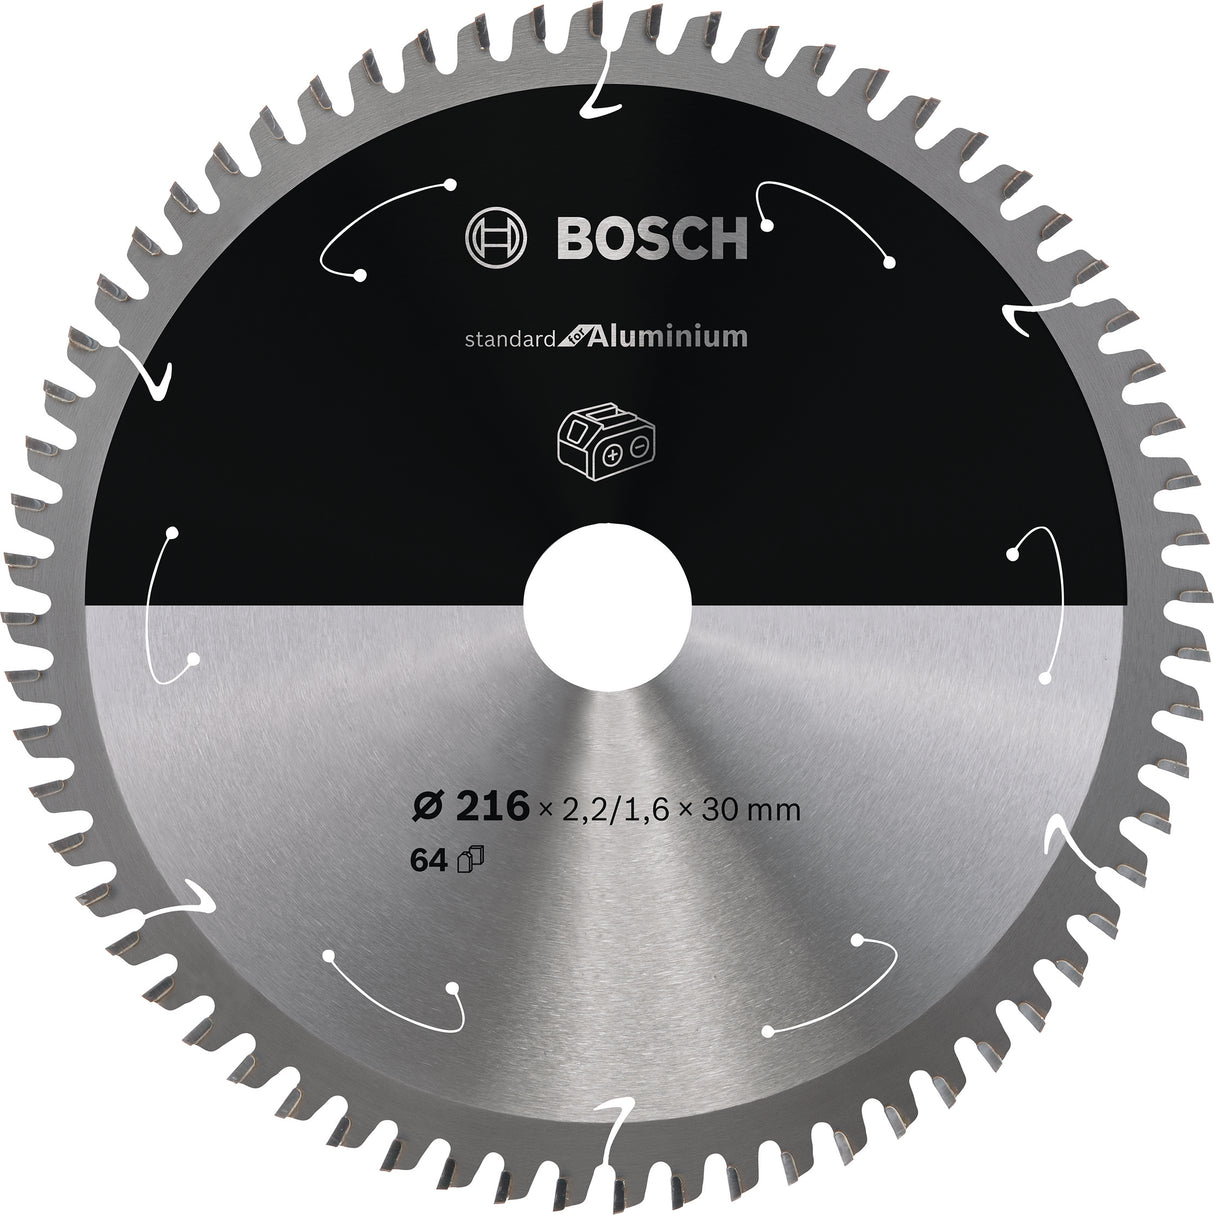 Bosch Professional Aluminium Circular Saw Blade for Cordless Saws - 216x2.2/1.6x30 T64 - Standard